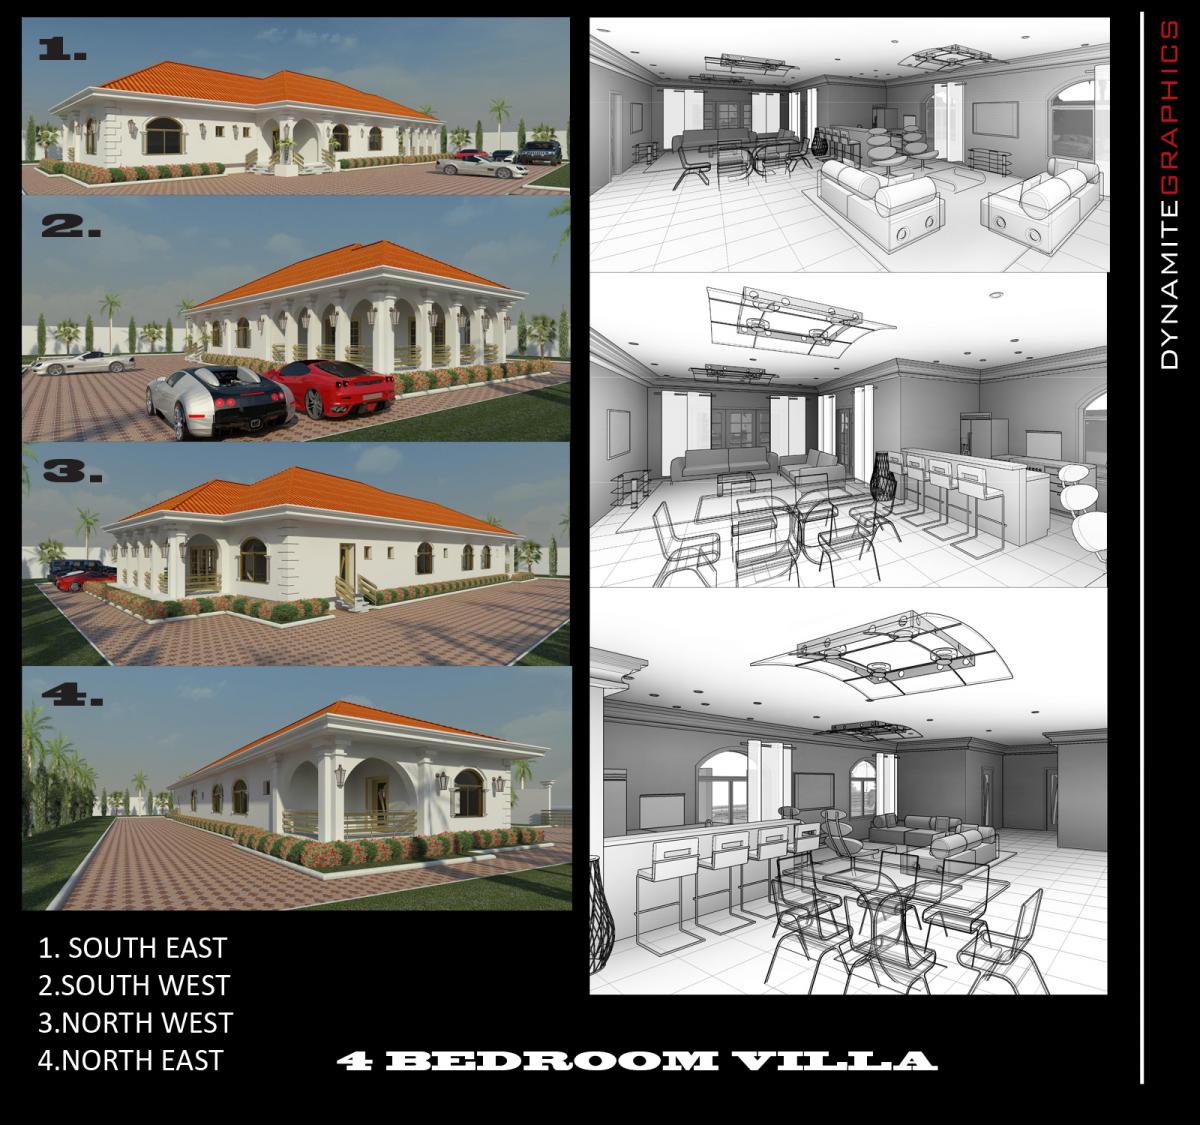 4 bdrm villa perspectives